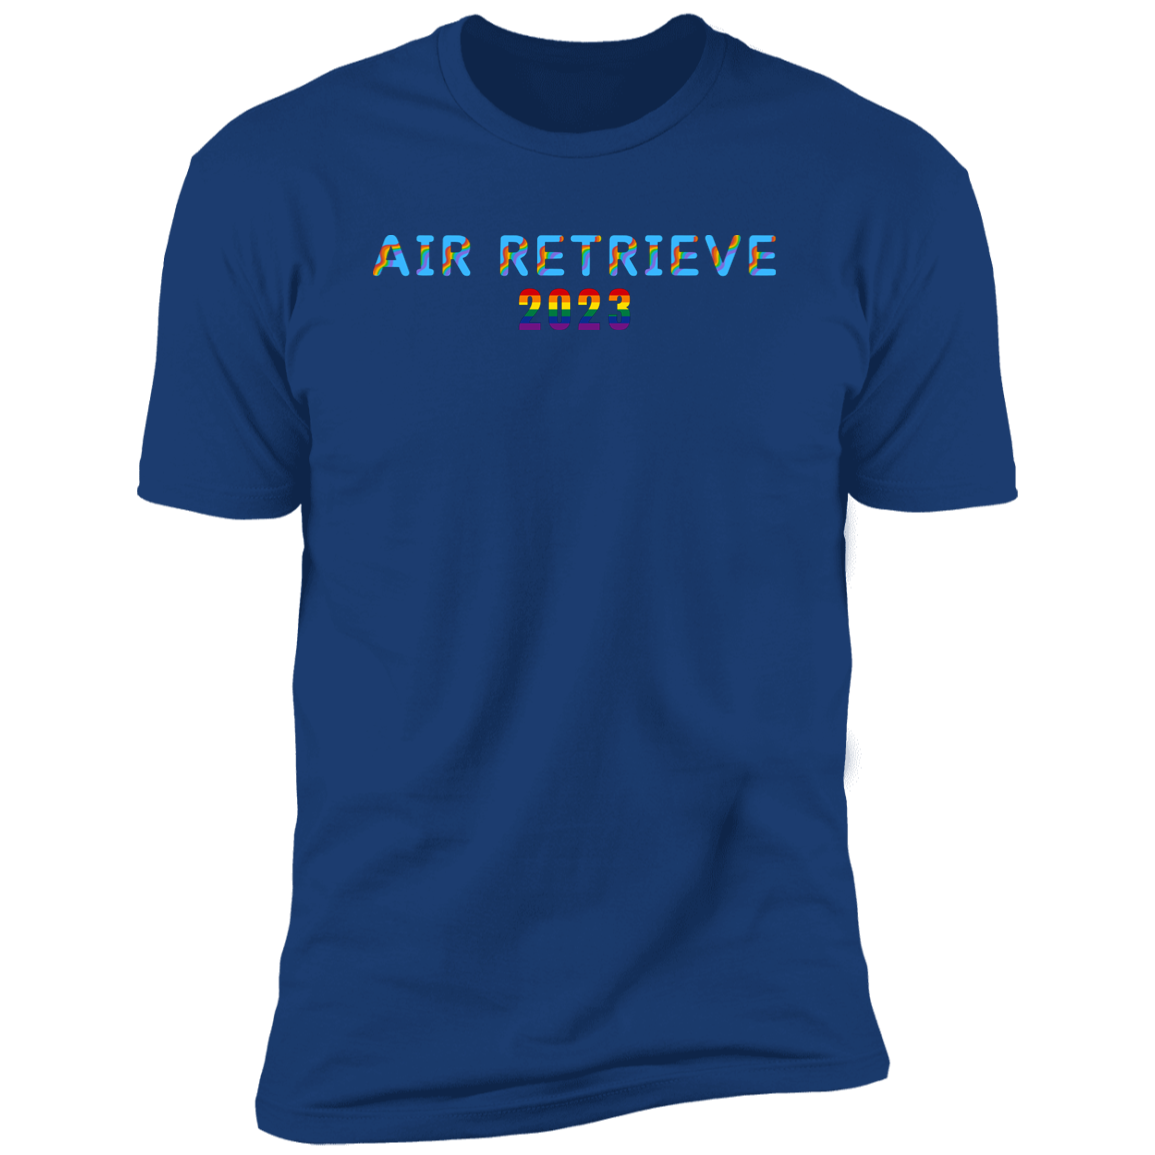 Air Retrieve 2023 Pride Dock diving t-shirt, dog pride air retrieve dock diving shirt for humans, in royal blue